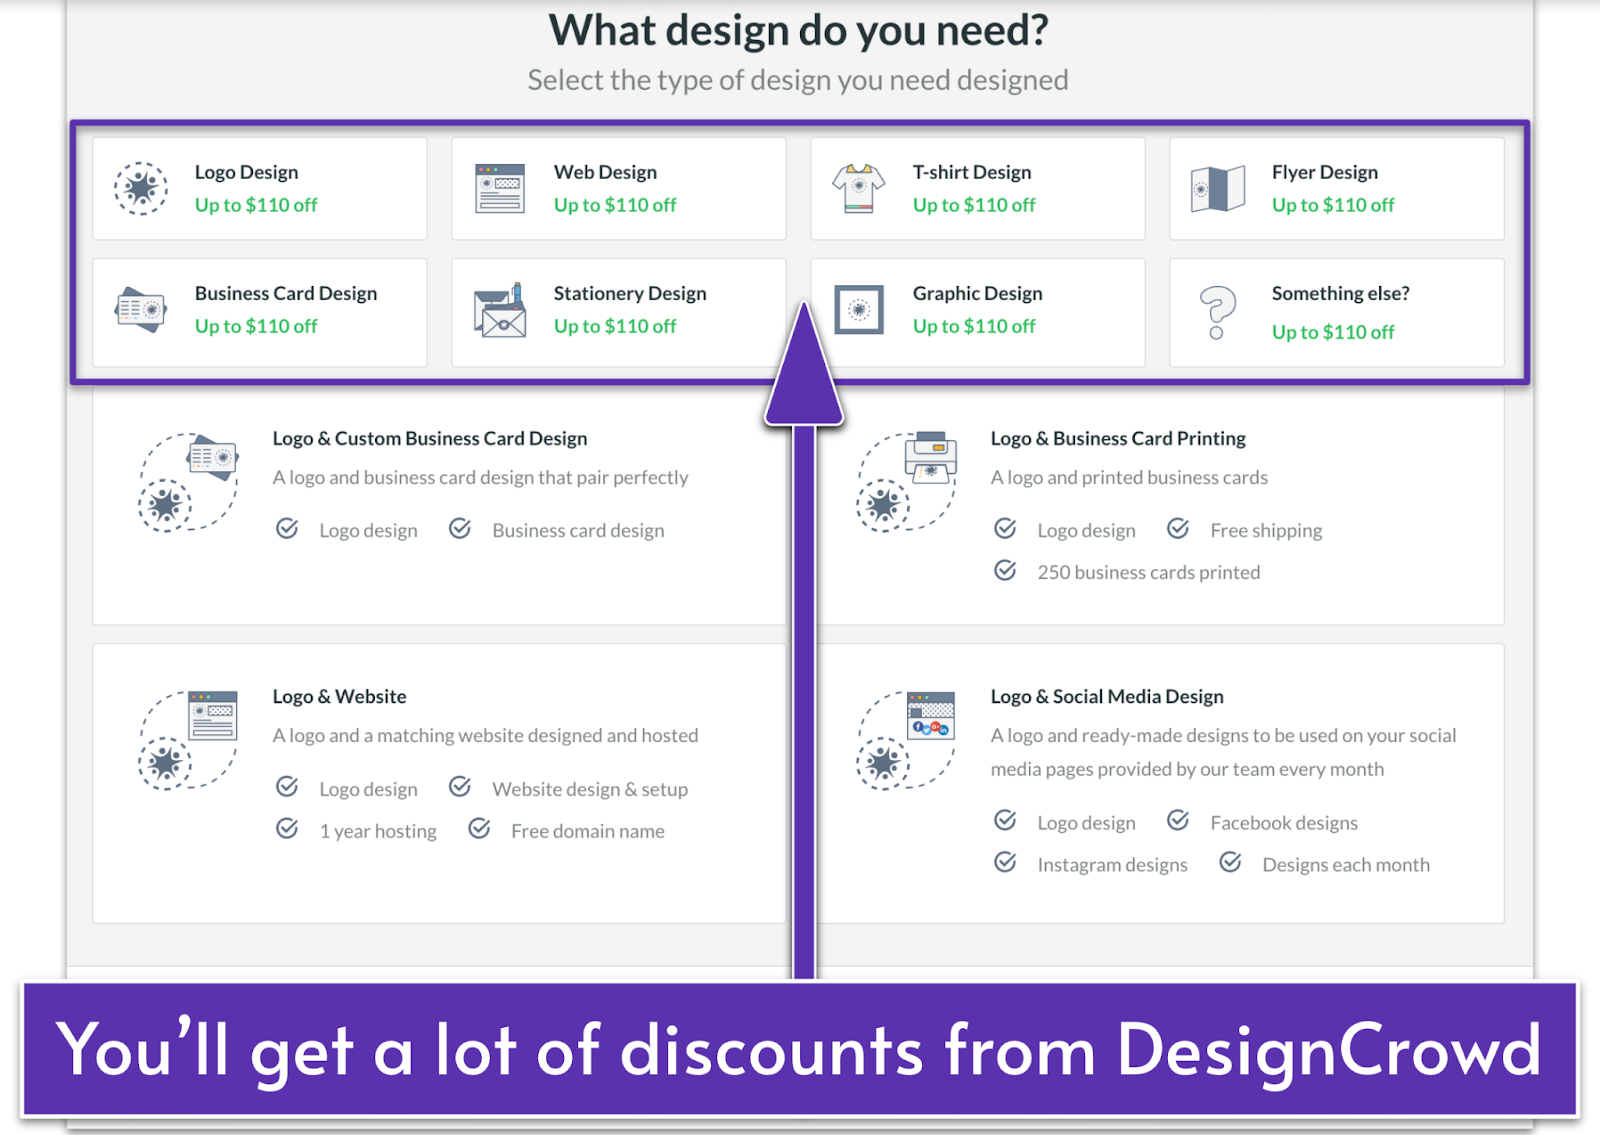 DesignCrowd's discounts